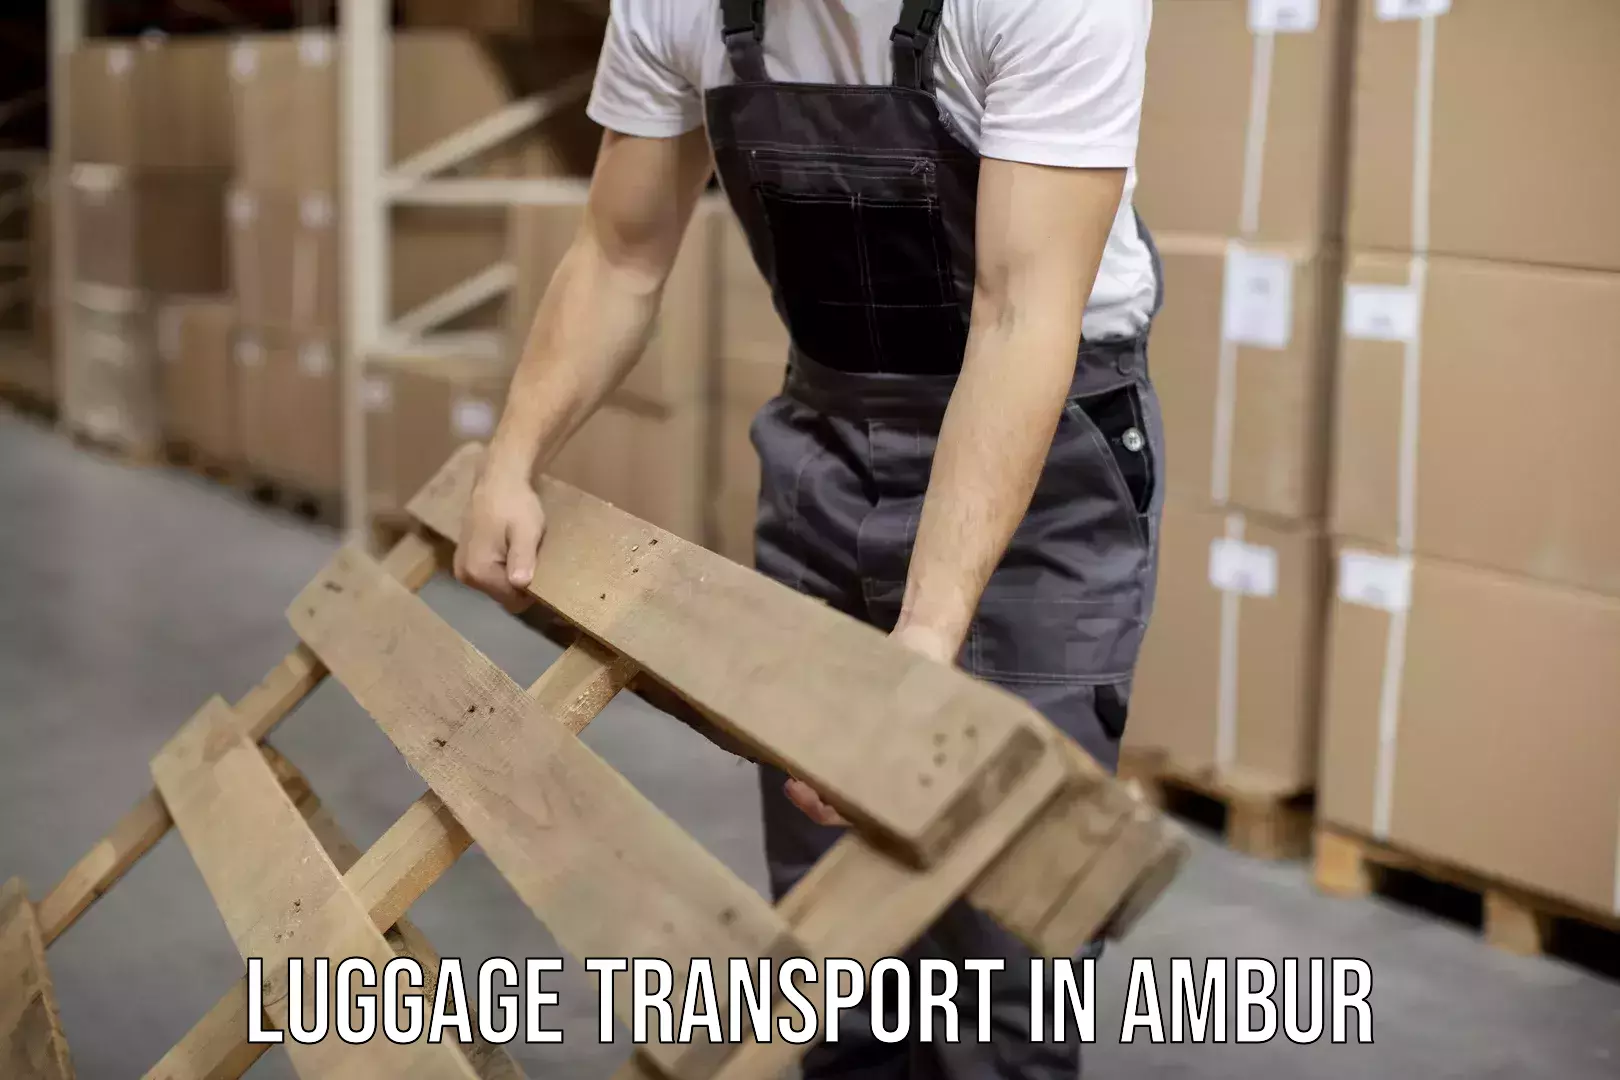 Doorstep luggage collection in Ambur